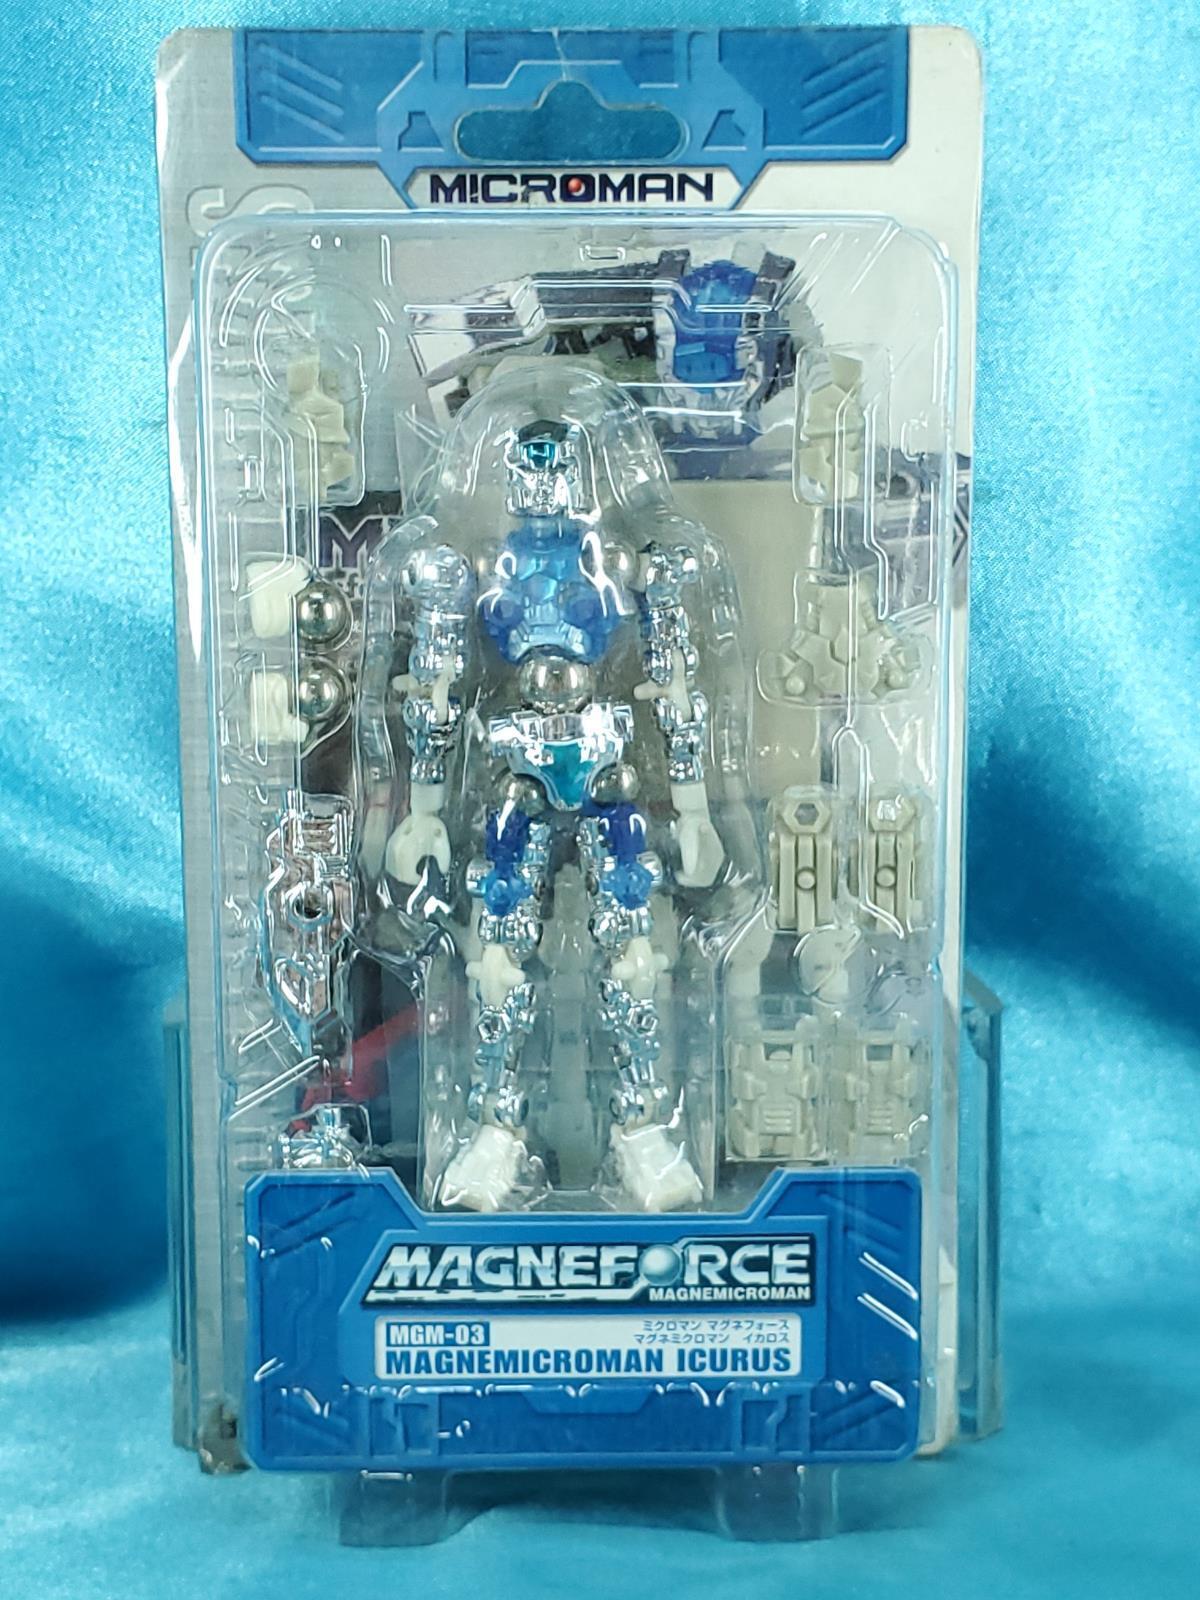 Takara Microman Micronauts Magneforce MagneMicroman Icurus MGM-03 Figure Last